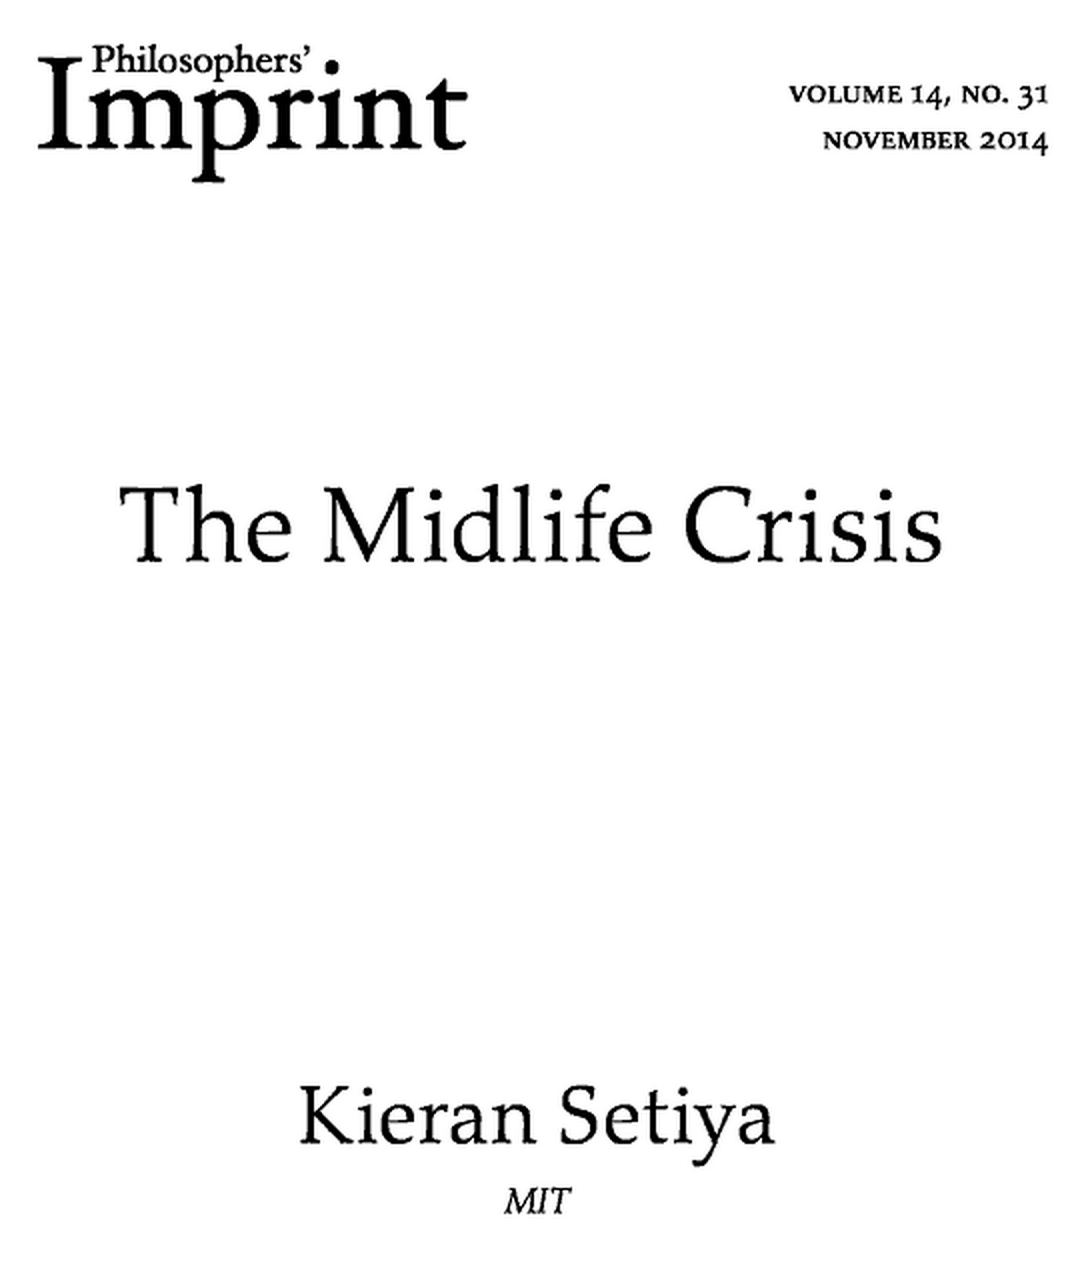 Kieran Setiya, "The Midlife Crisis" (2014)